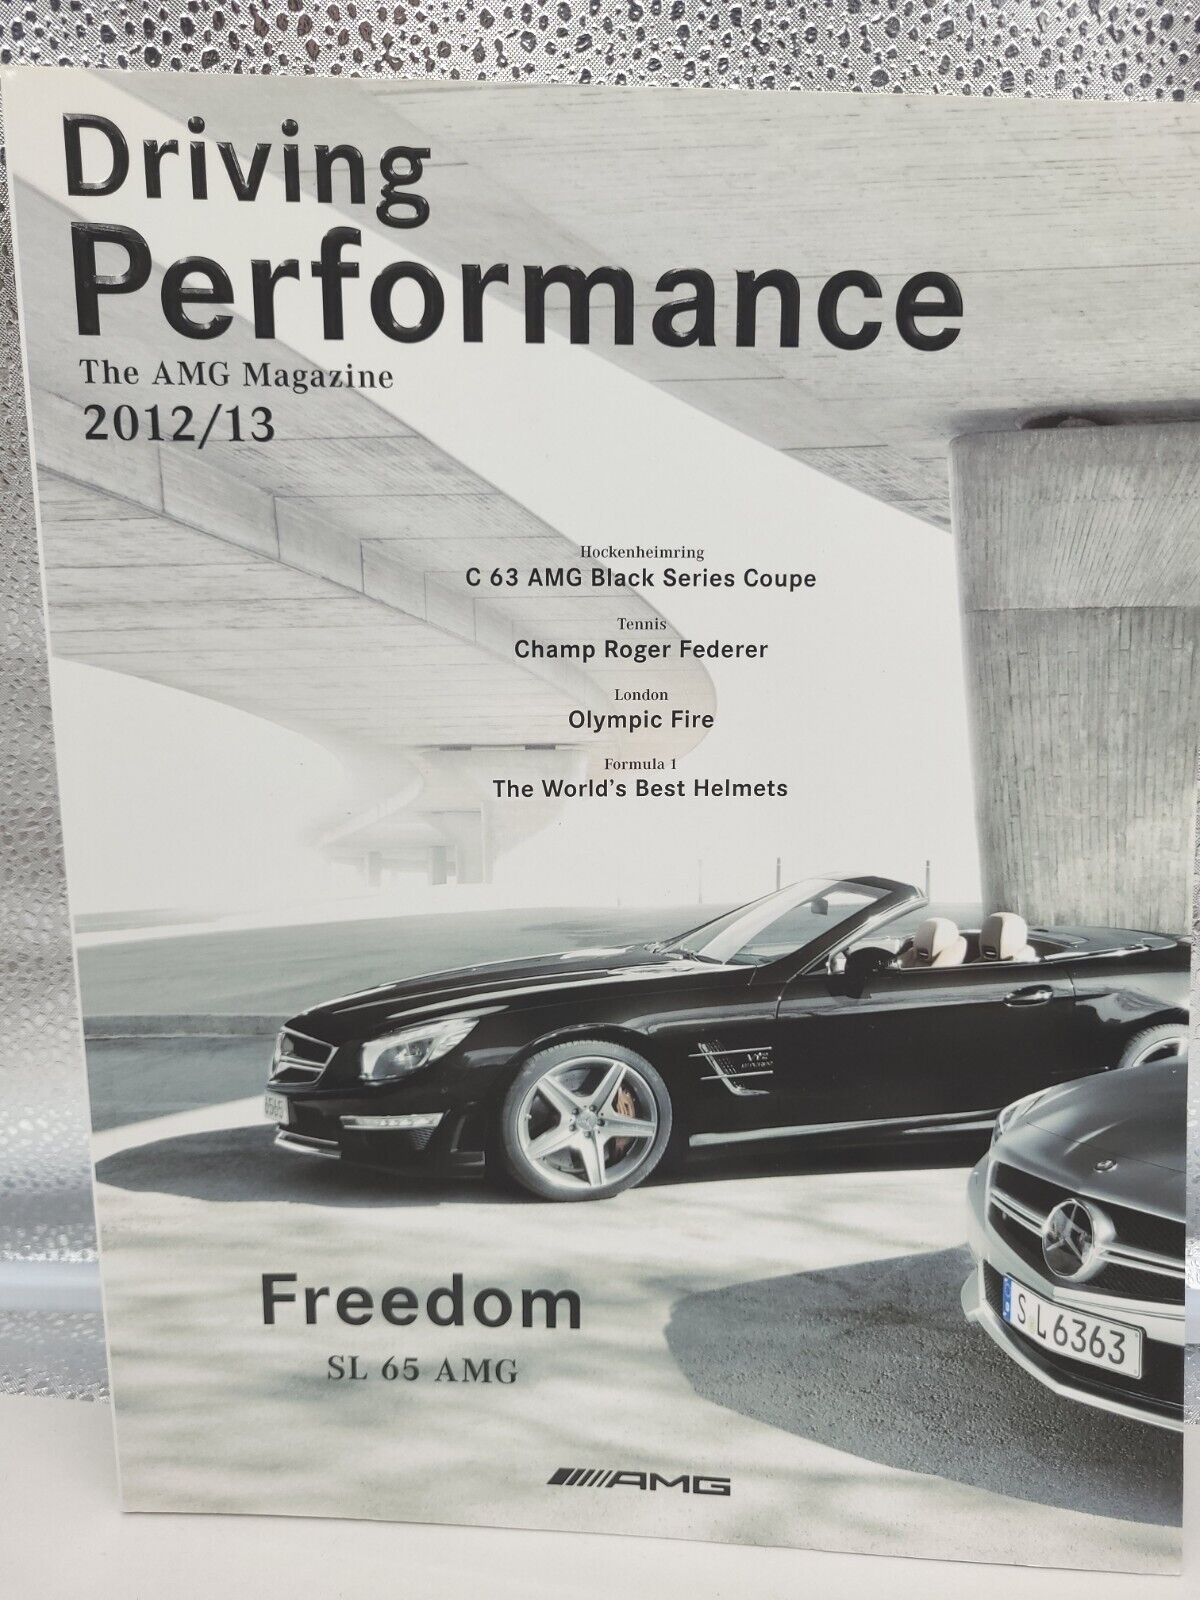 Driving Performance Magazine AMG, Mercedes-Benz FreedomSL 65 AMG, 2012/13